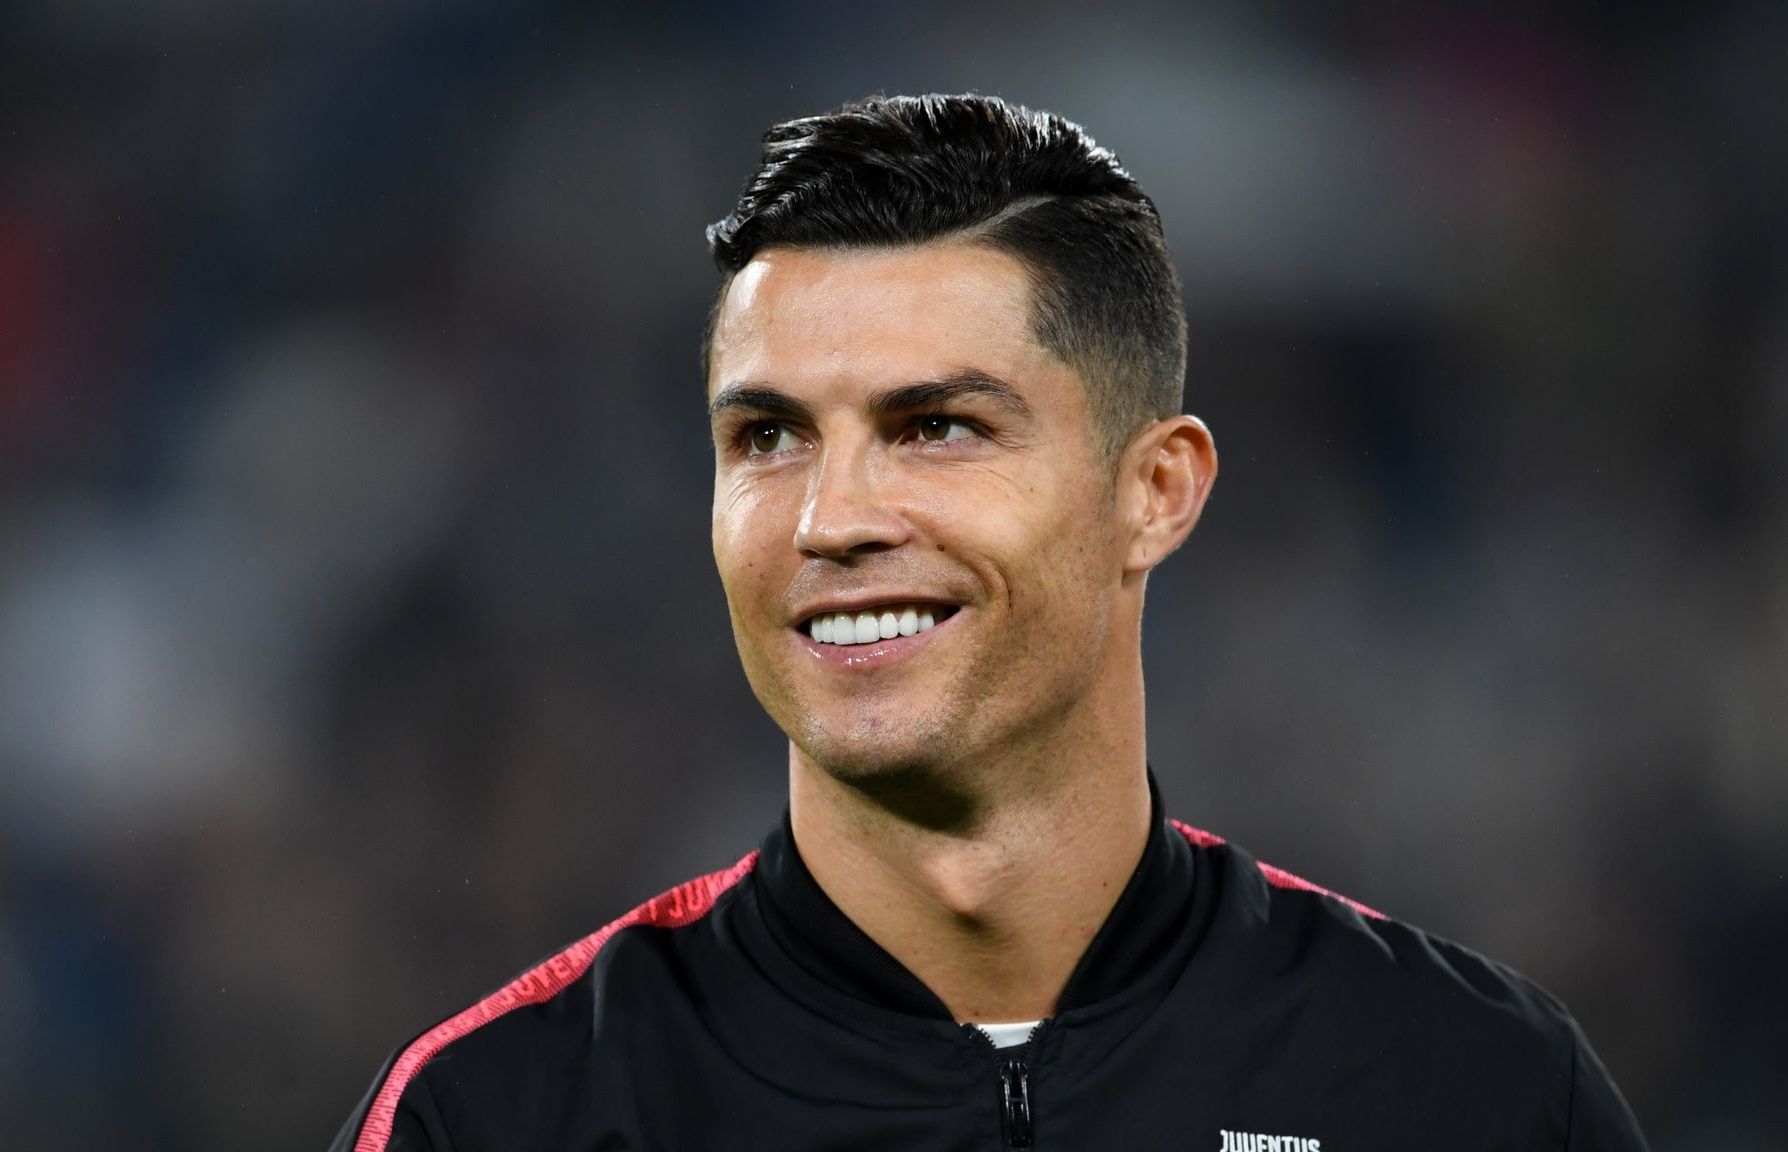 Cristiano Ronaldo Biografía 2021 - Image to u